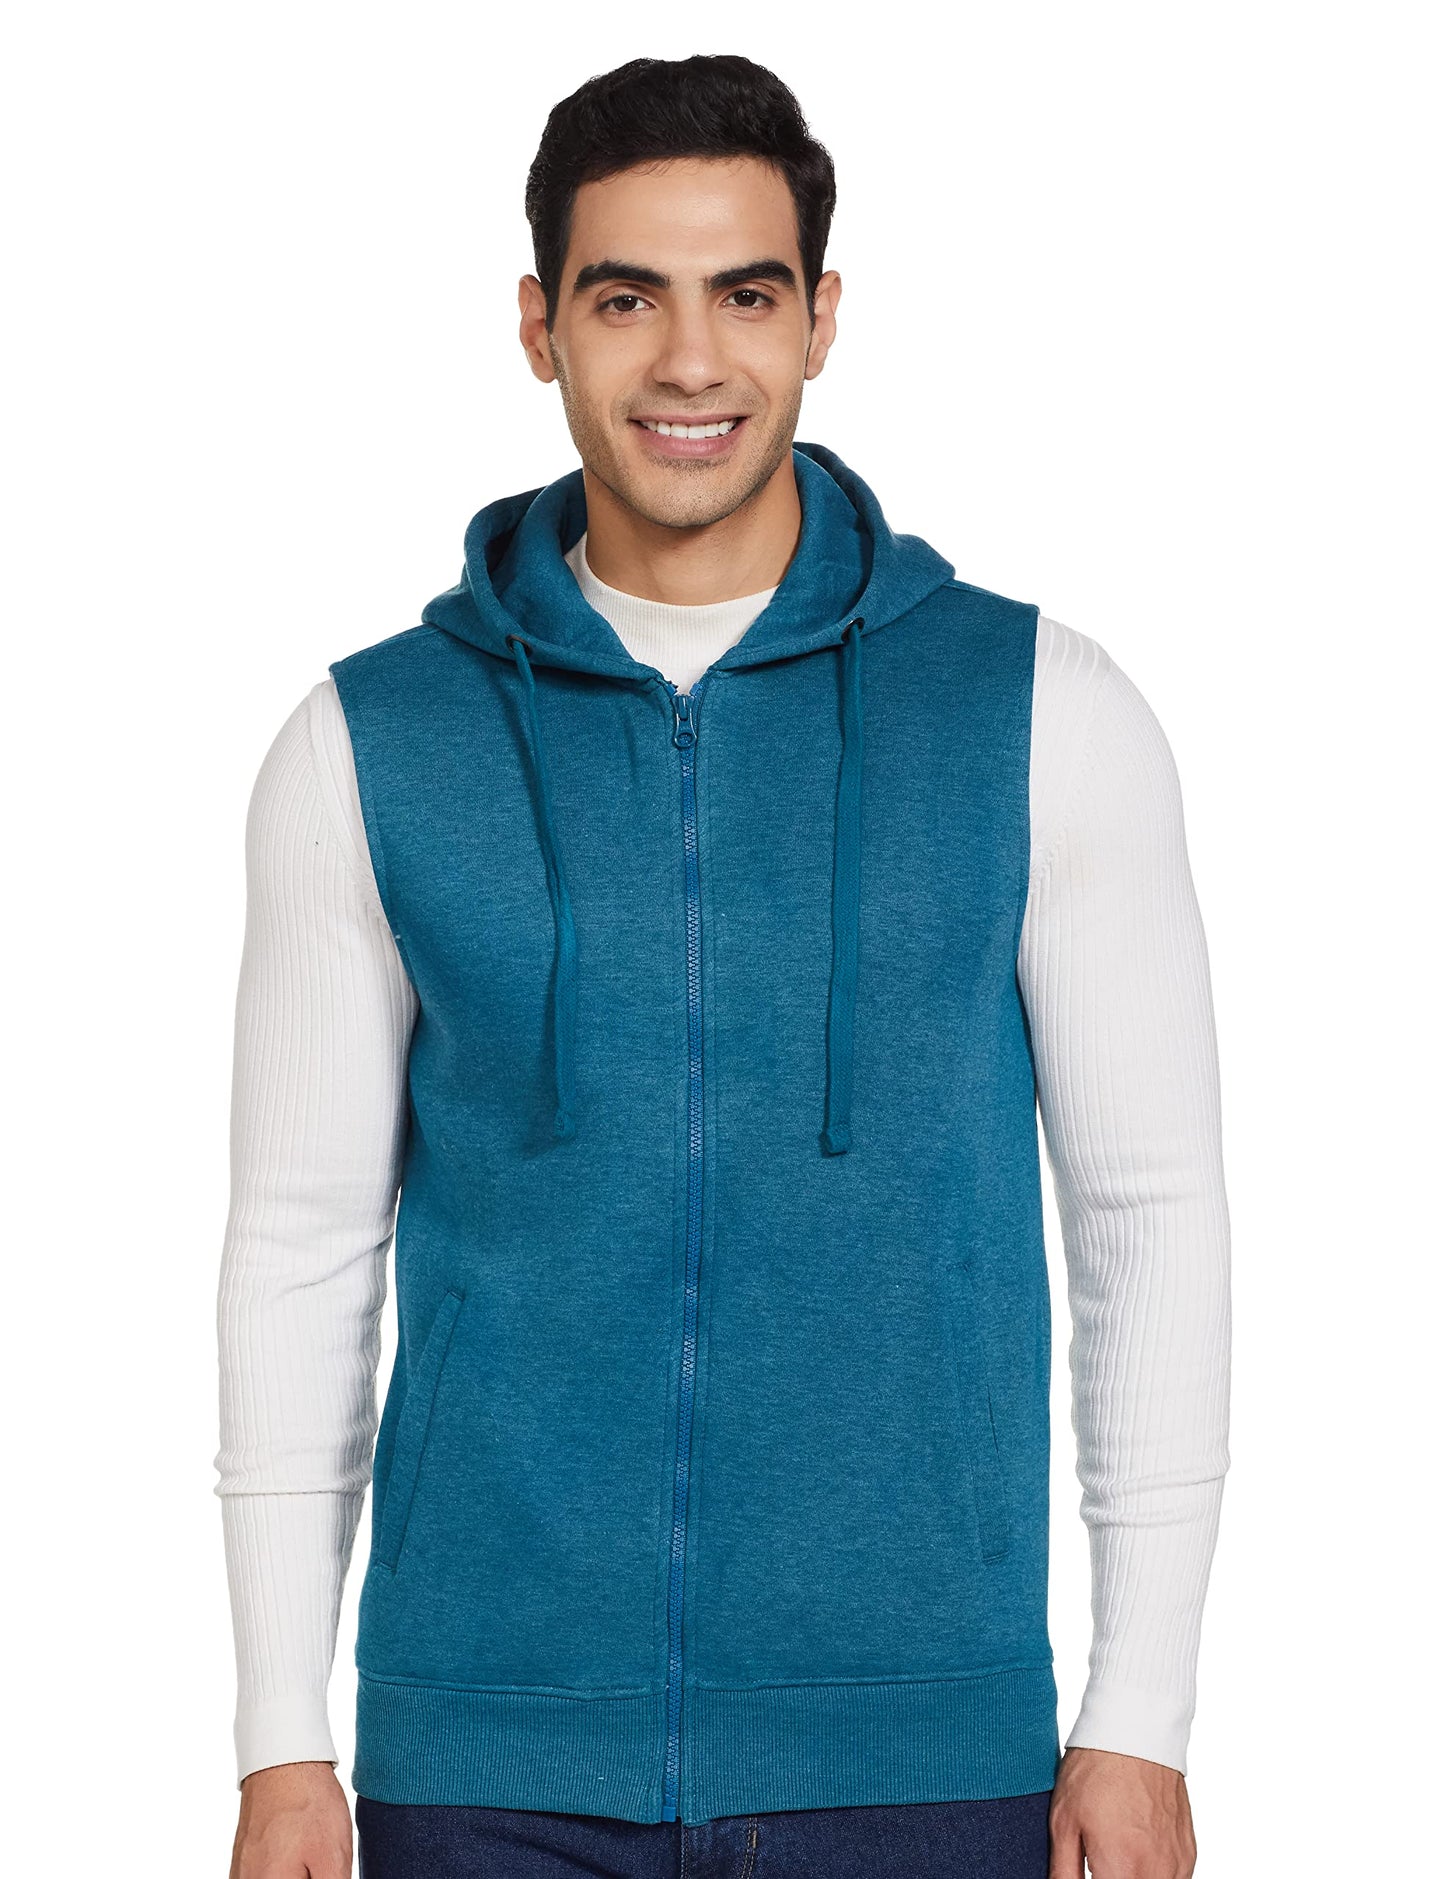 Amazon Brand - Symbol Men's Cotton Hooded Neck Sweatshirt(AW18MNSSW06_Fog Teal Mel_L_Fog Teal Mel_L) 